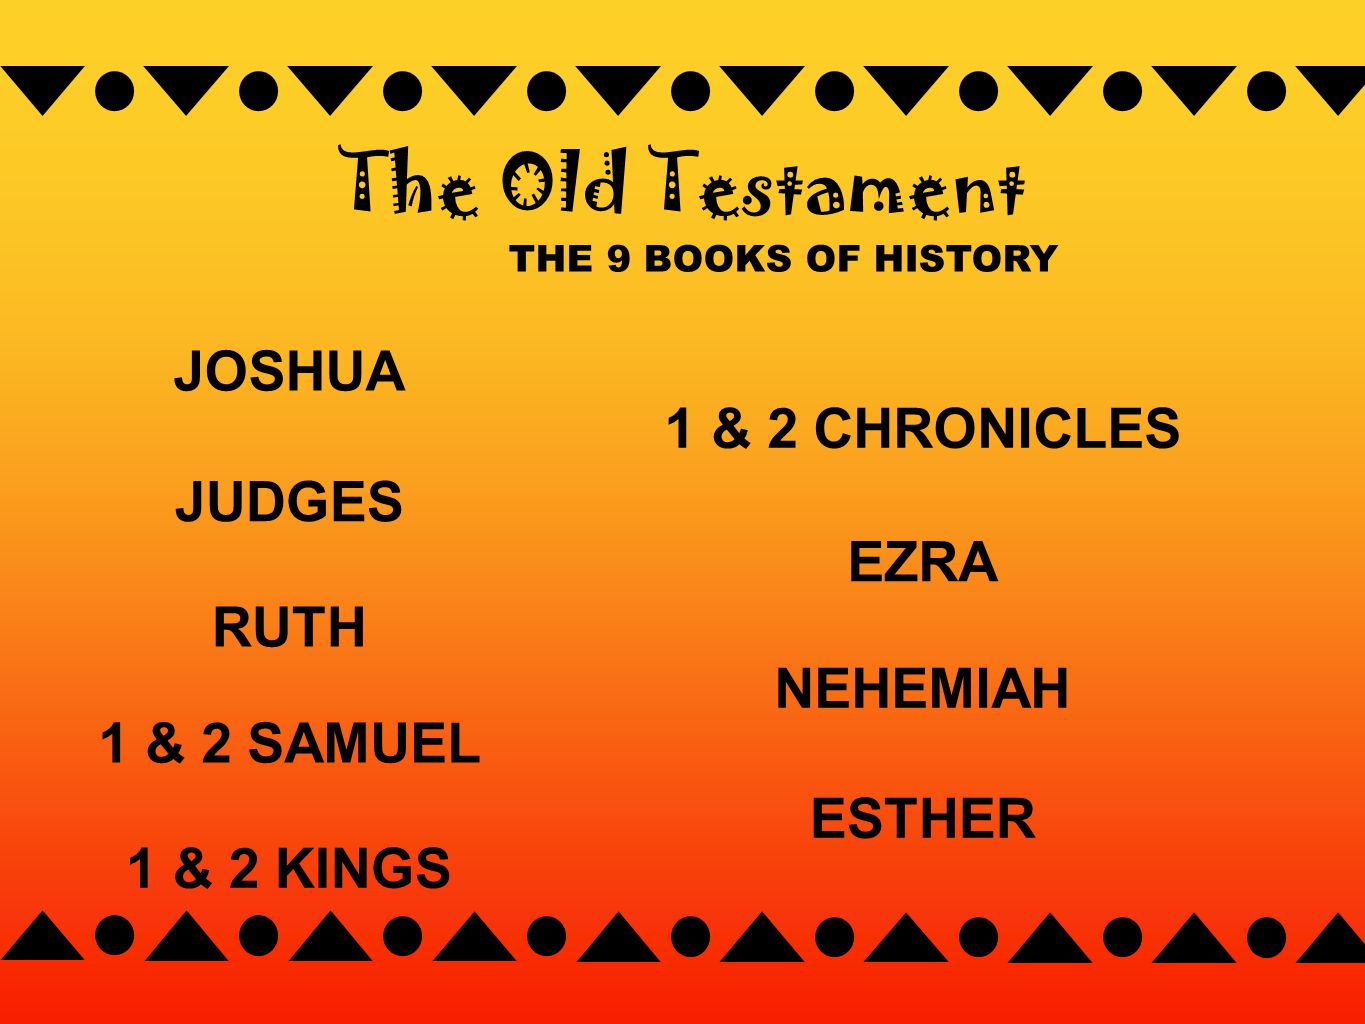 THE 9 BOOKS OF HISTORY The Old Testament JOSHUA JUDGES RUTH 1 & 2 SAMUEL 1 & 2 KINGS 1 & 2 CHRONICLES EZRA NEHEMIAH ESTHER